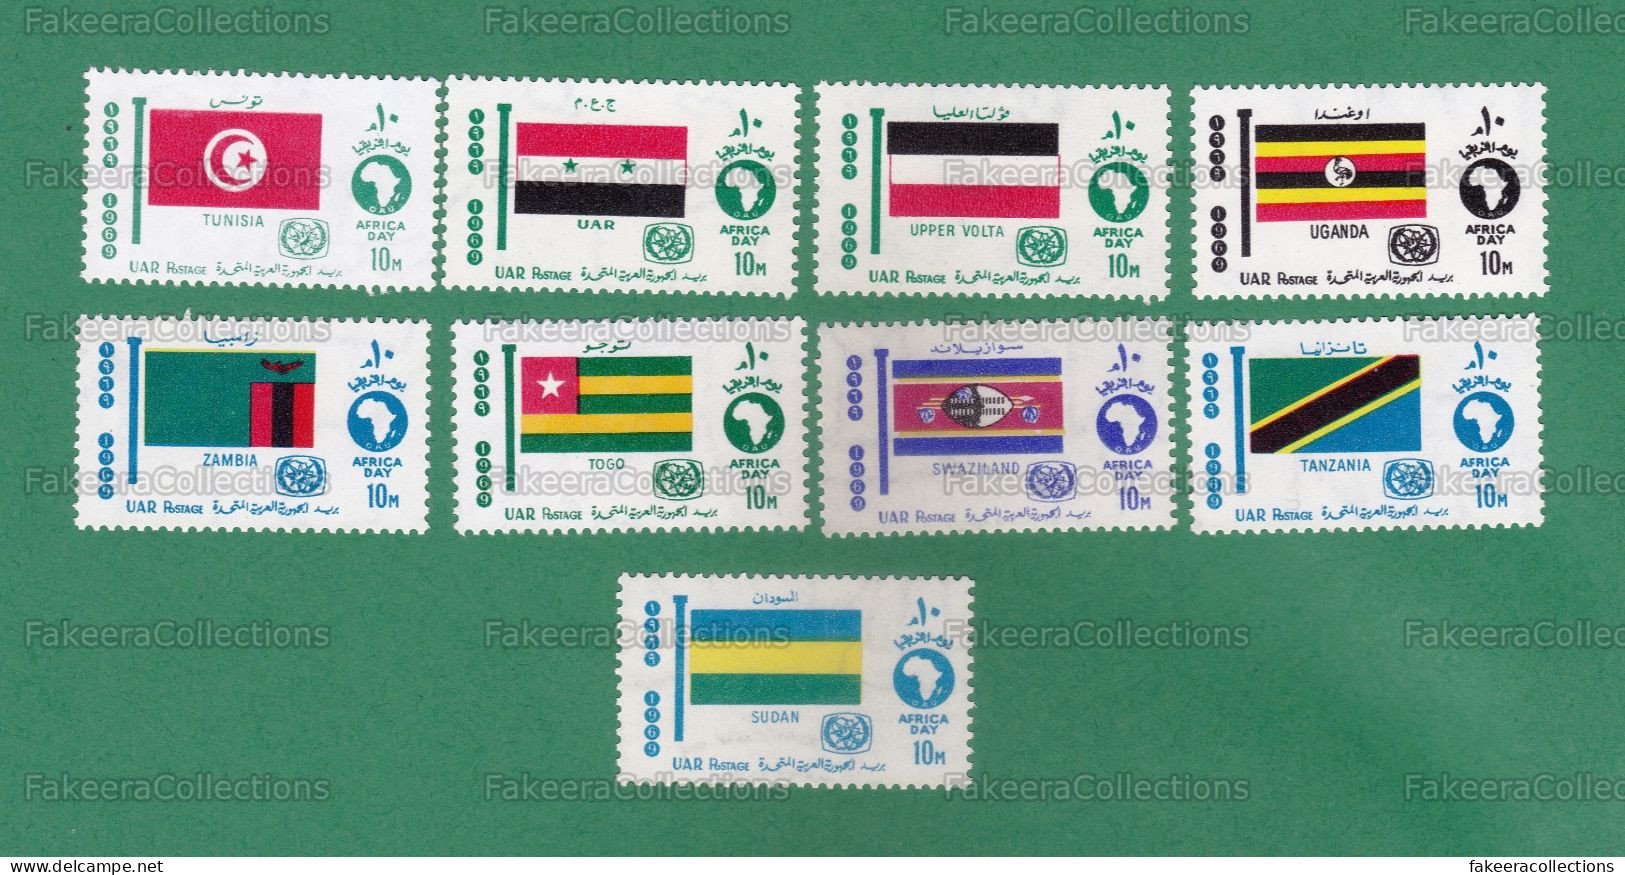 UNITED ARAB REPUBLIC (EGYPT) UAR 1969 - AFRICA DAY 41v MNH ** Set - NATIONAL FLAGS, Tourist Year, Flag, Emblem - As Scan - Ungebraucht